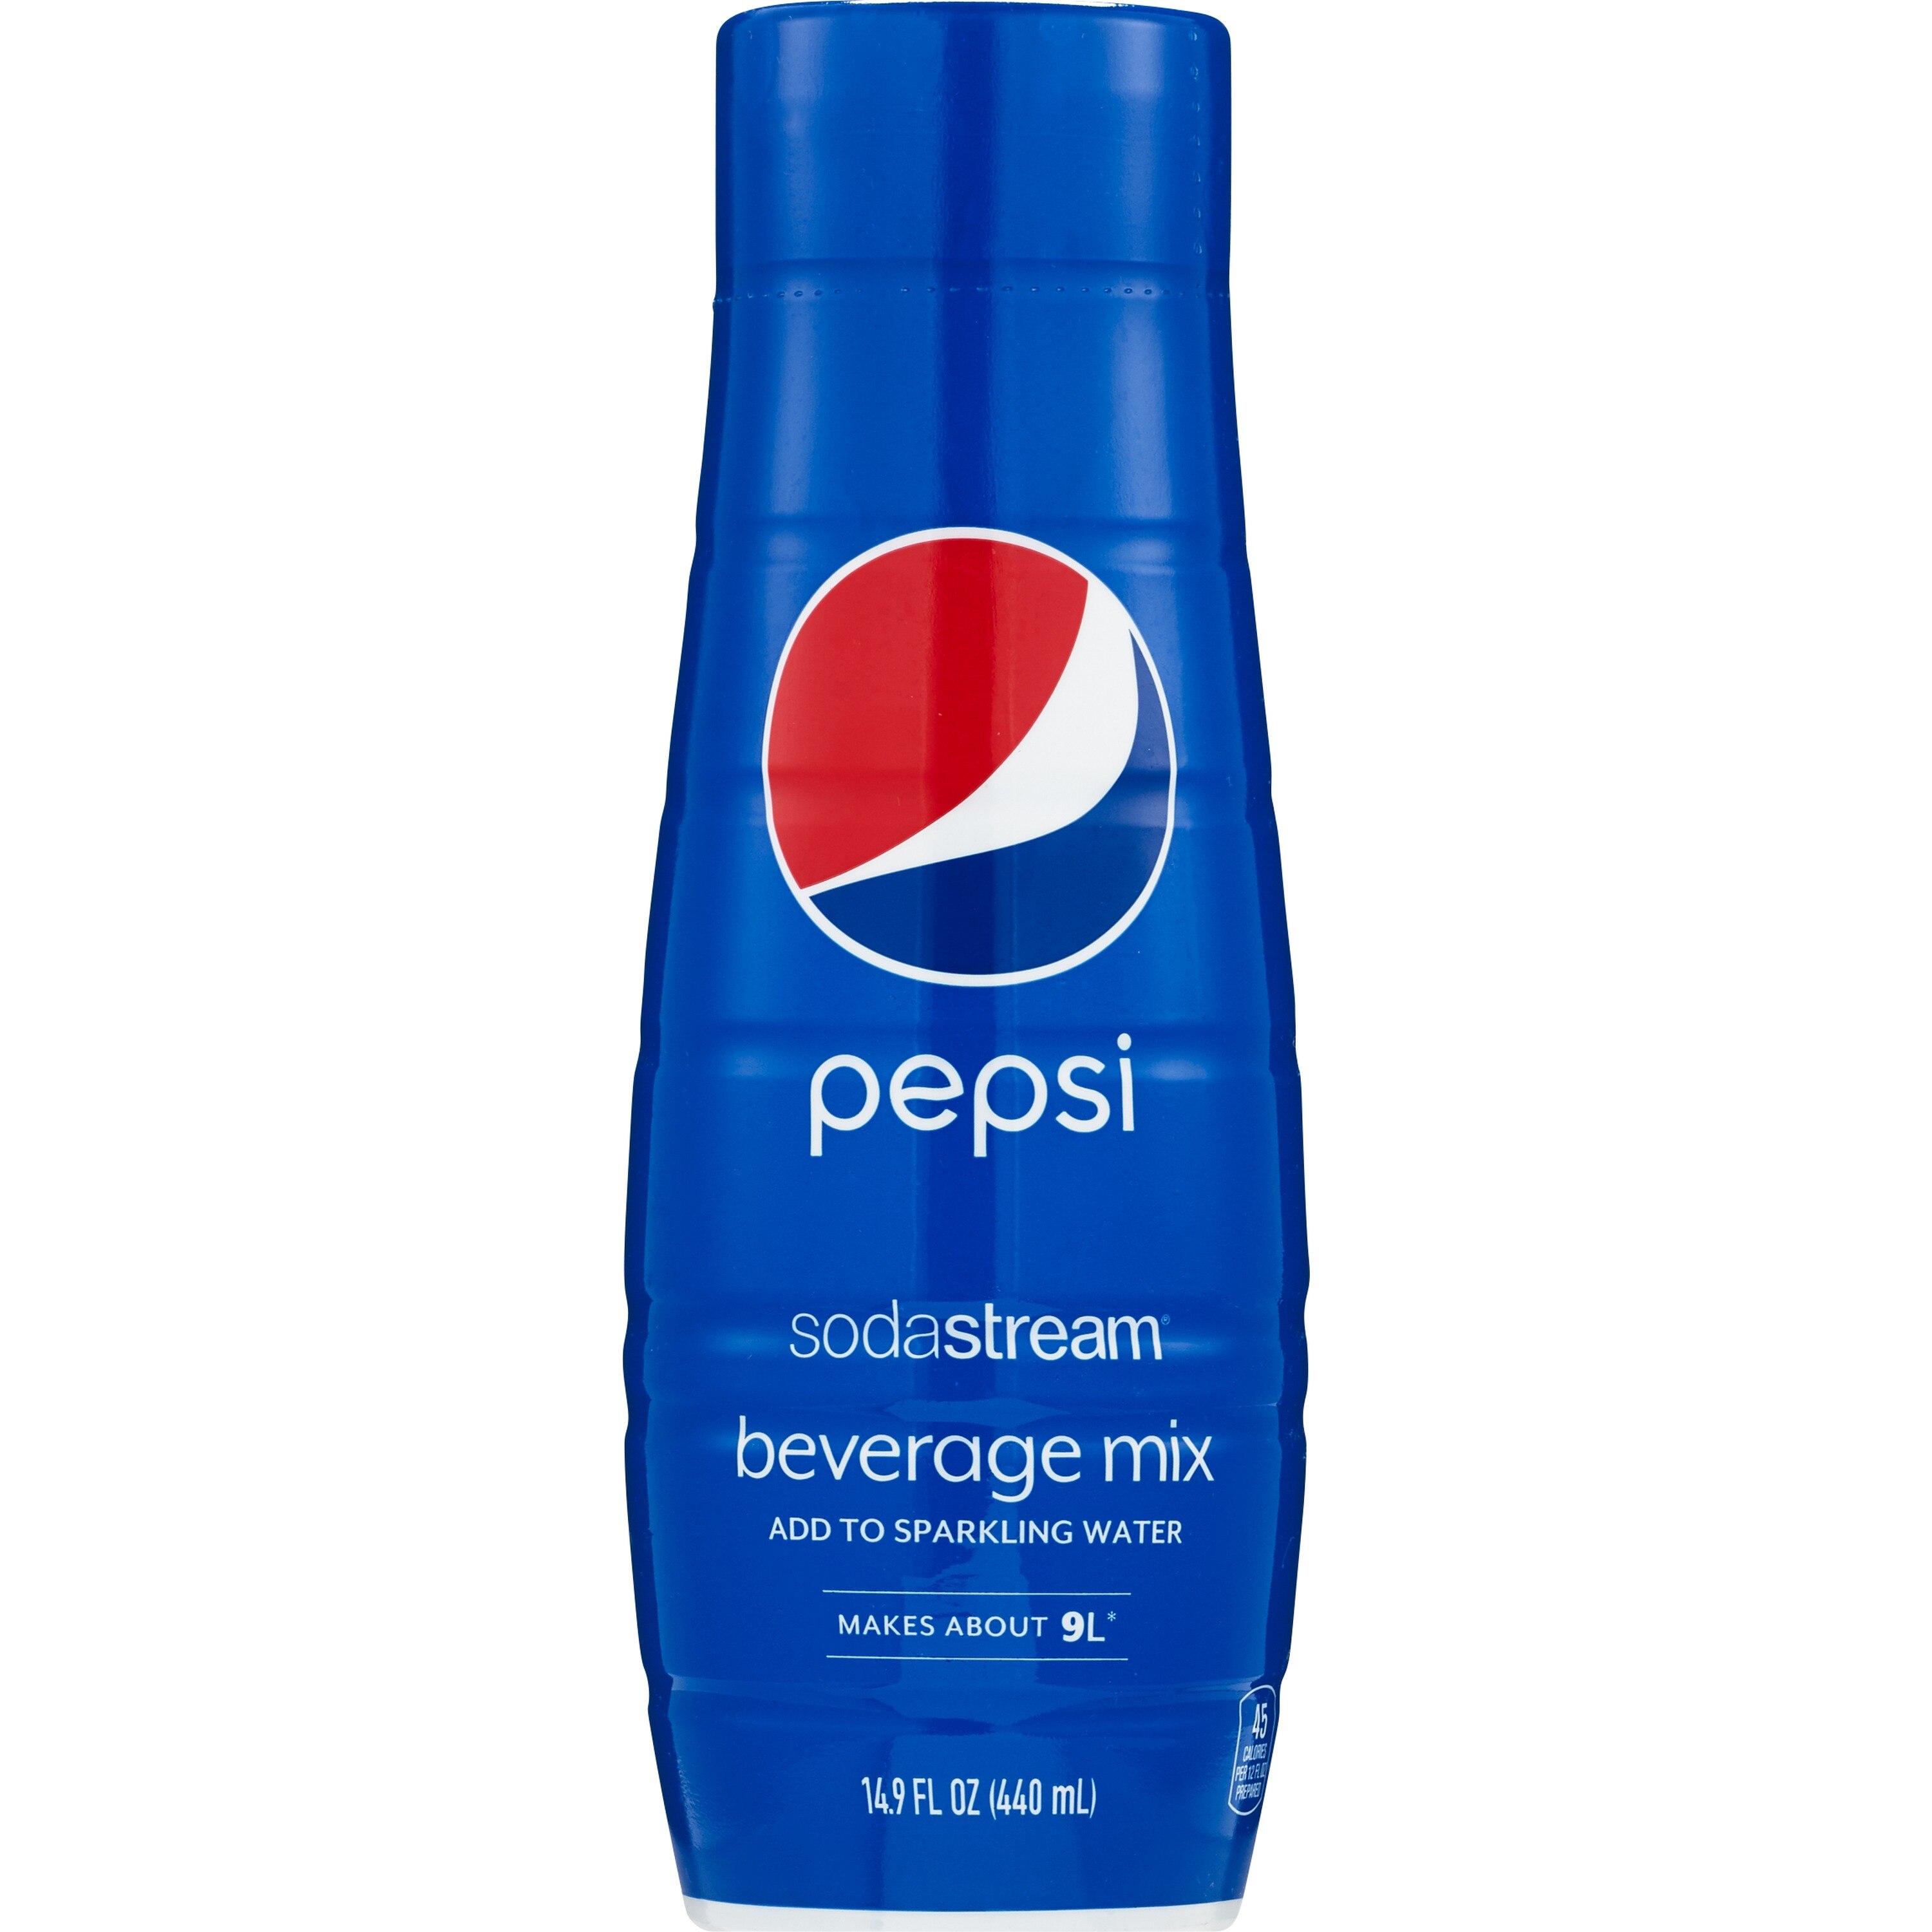 Customer Reviews: SodaStream Pepsi Beverage Mix, 14.9 fl oz - CVS Pharmacy